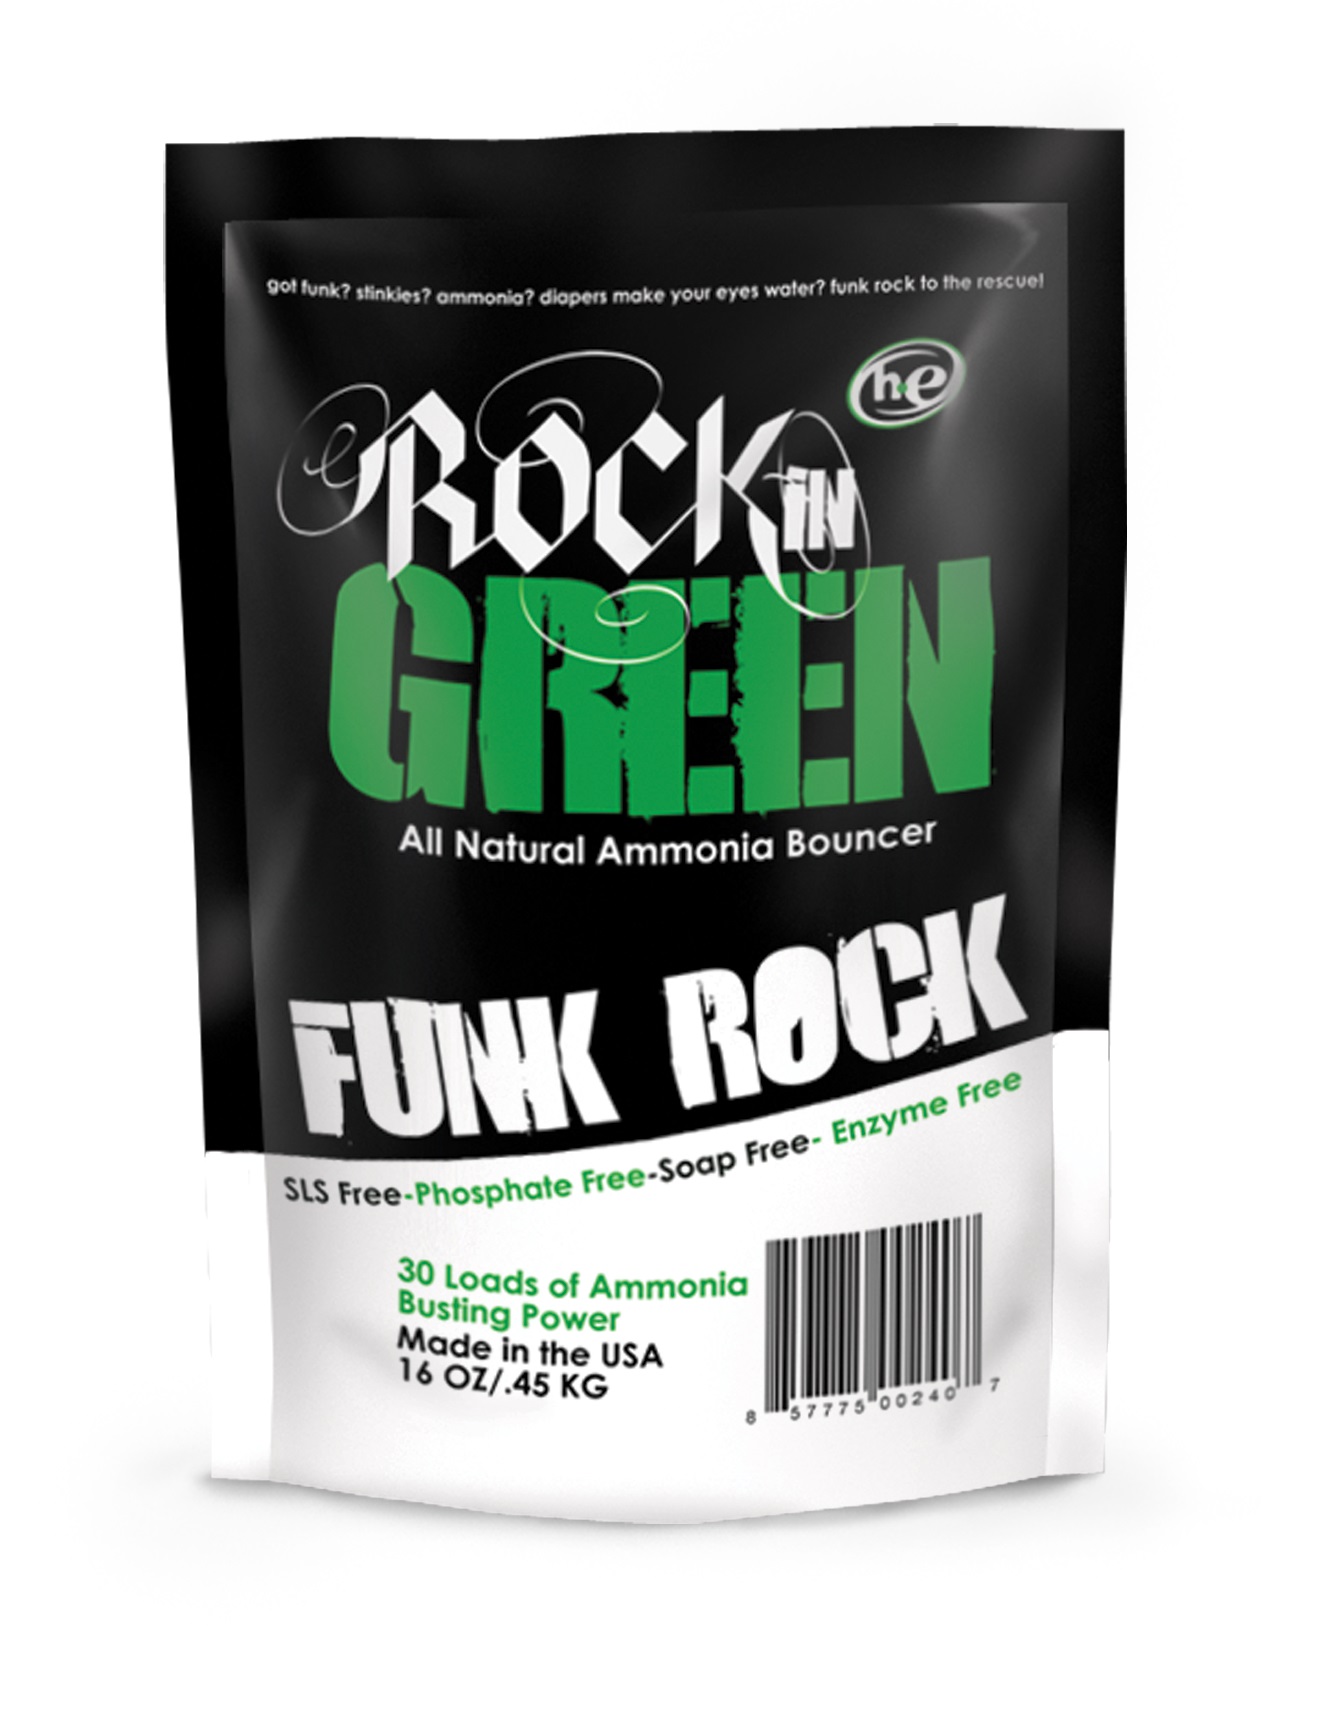 Funk Rock. Хариро фанк Грин. SEGUAA Funky Green. Rock it Funk.